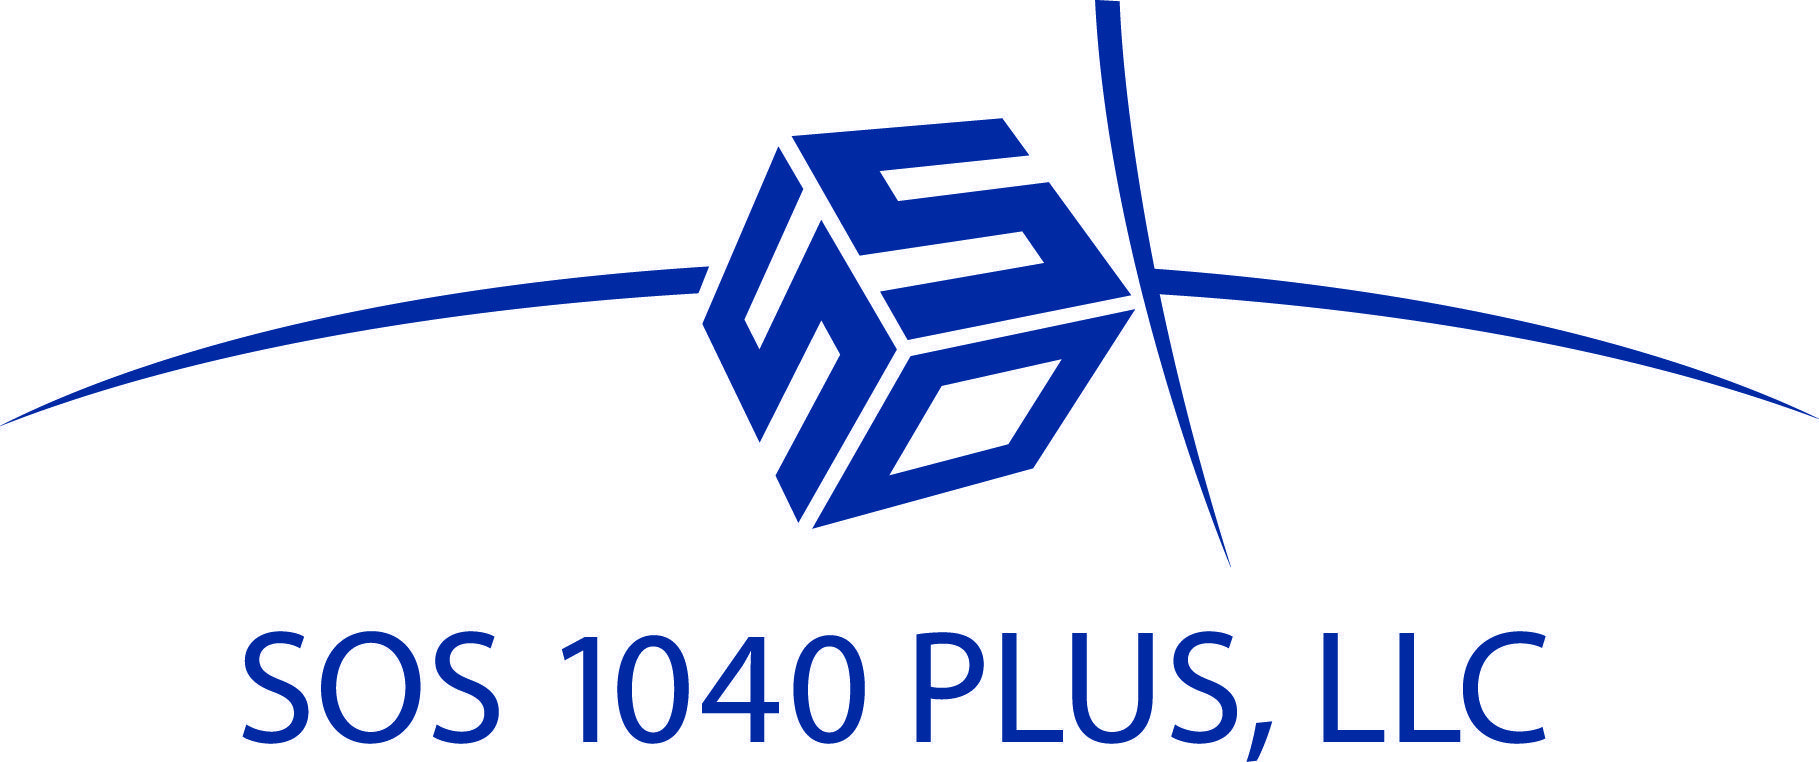 1040 Logo - SOS 1040 PLUS, LLC. Better Business Bureau® Profile